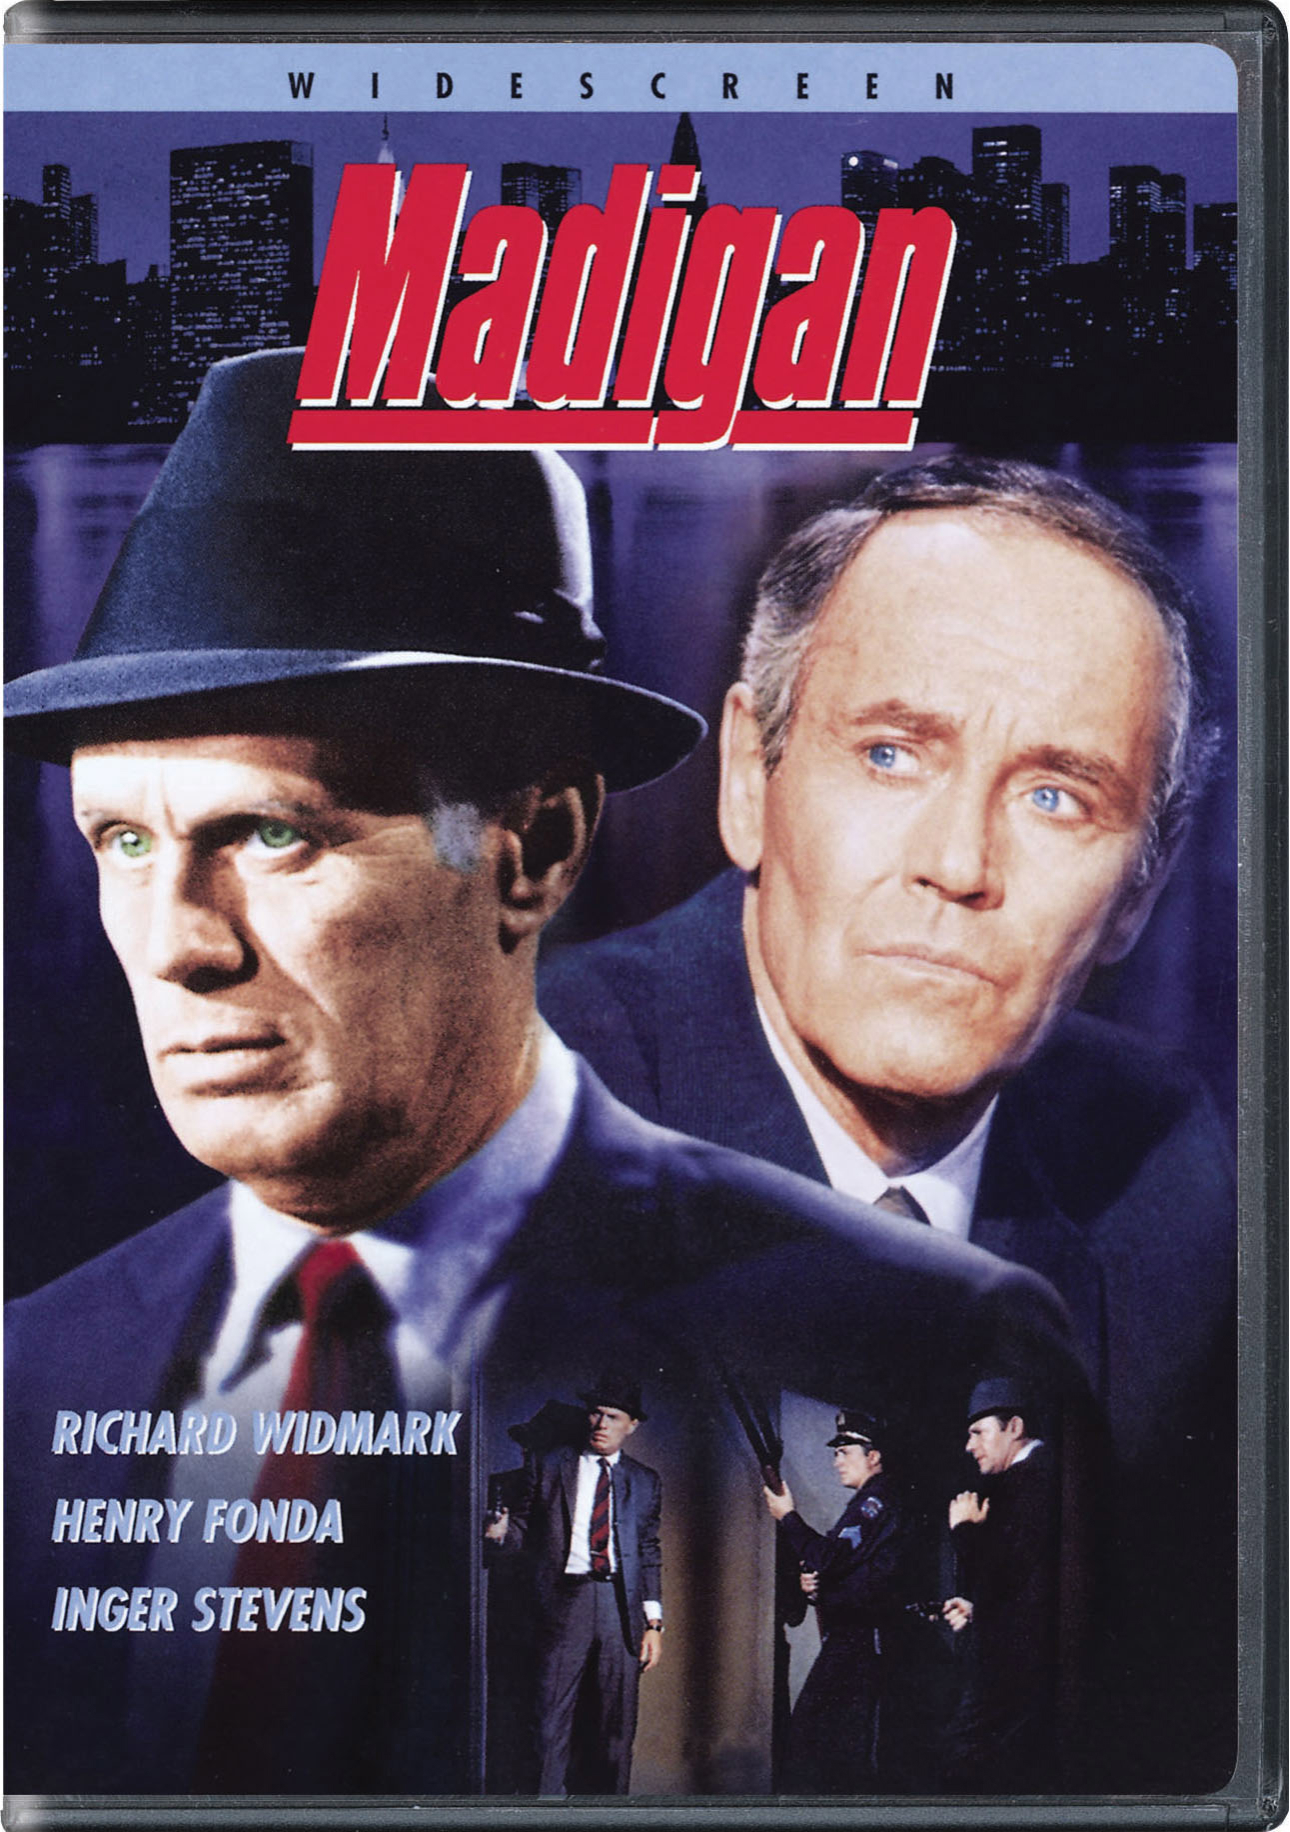 Madigan - DVD [ 1968 ]  - Modern Classic Movies On DVD - Movies On GRUV